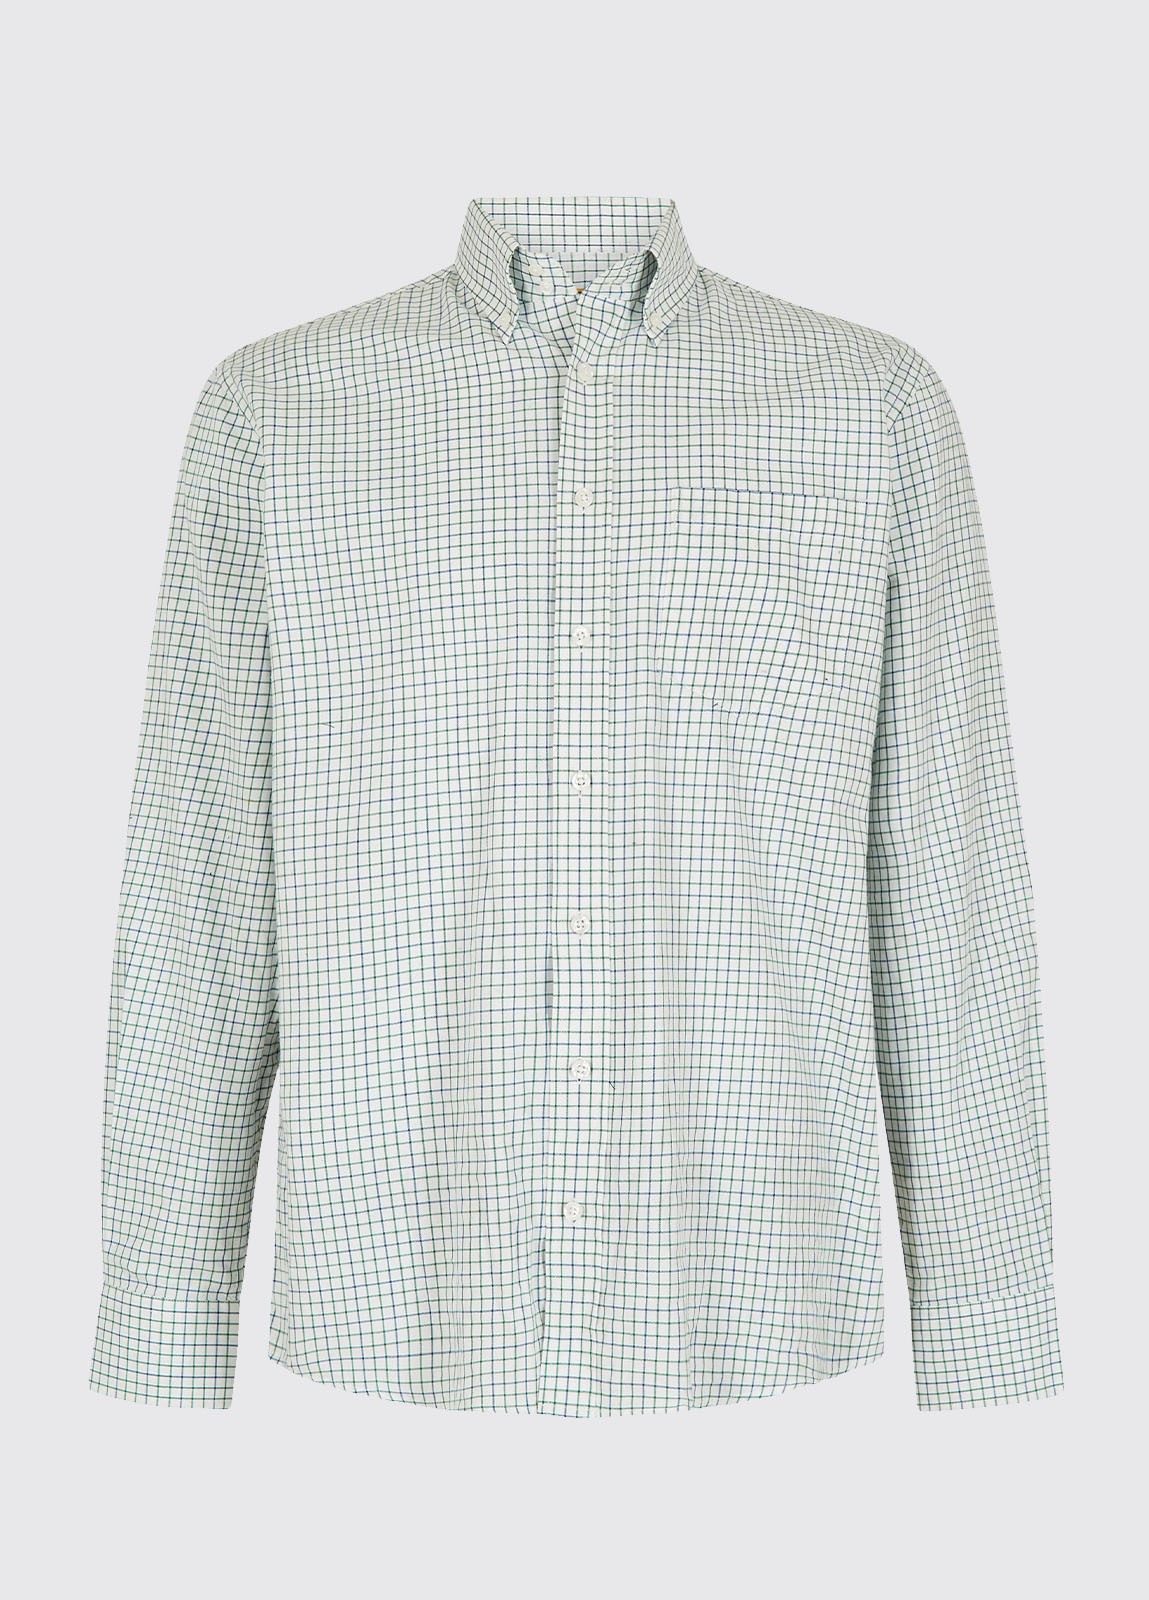 Muckross U Shirt - Dusky Green - Size Medium